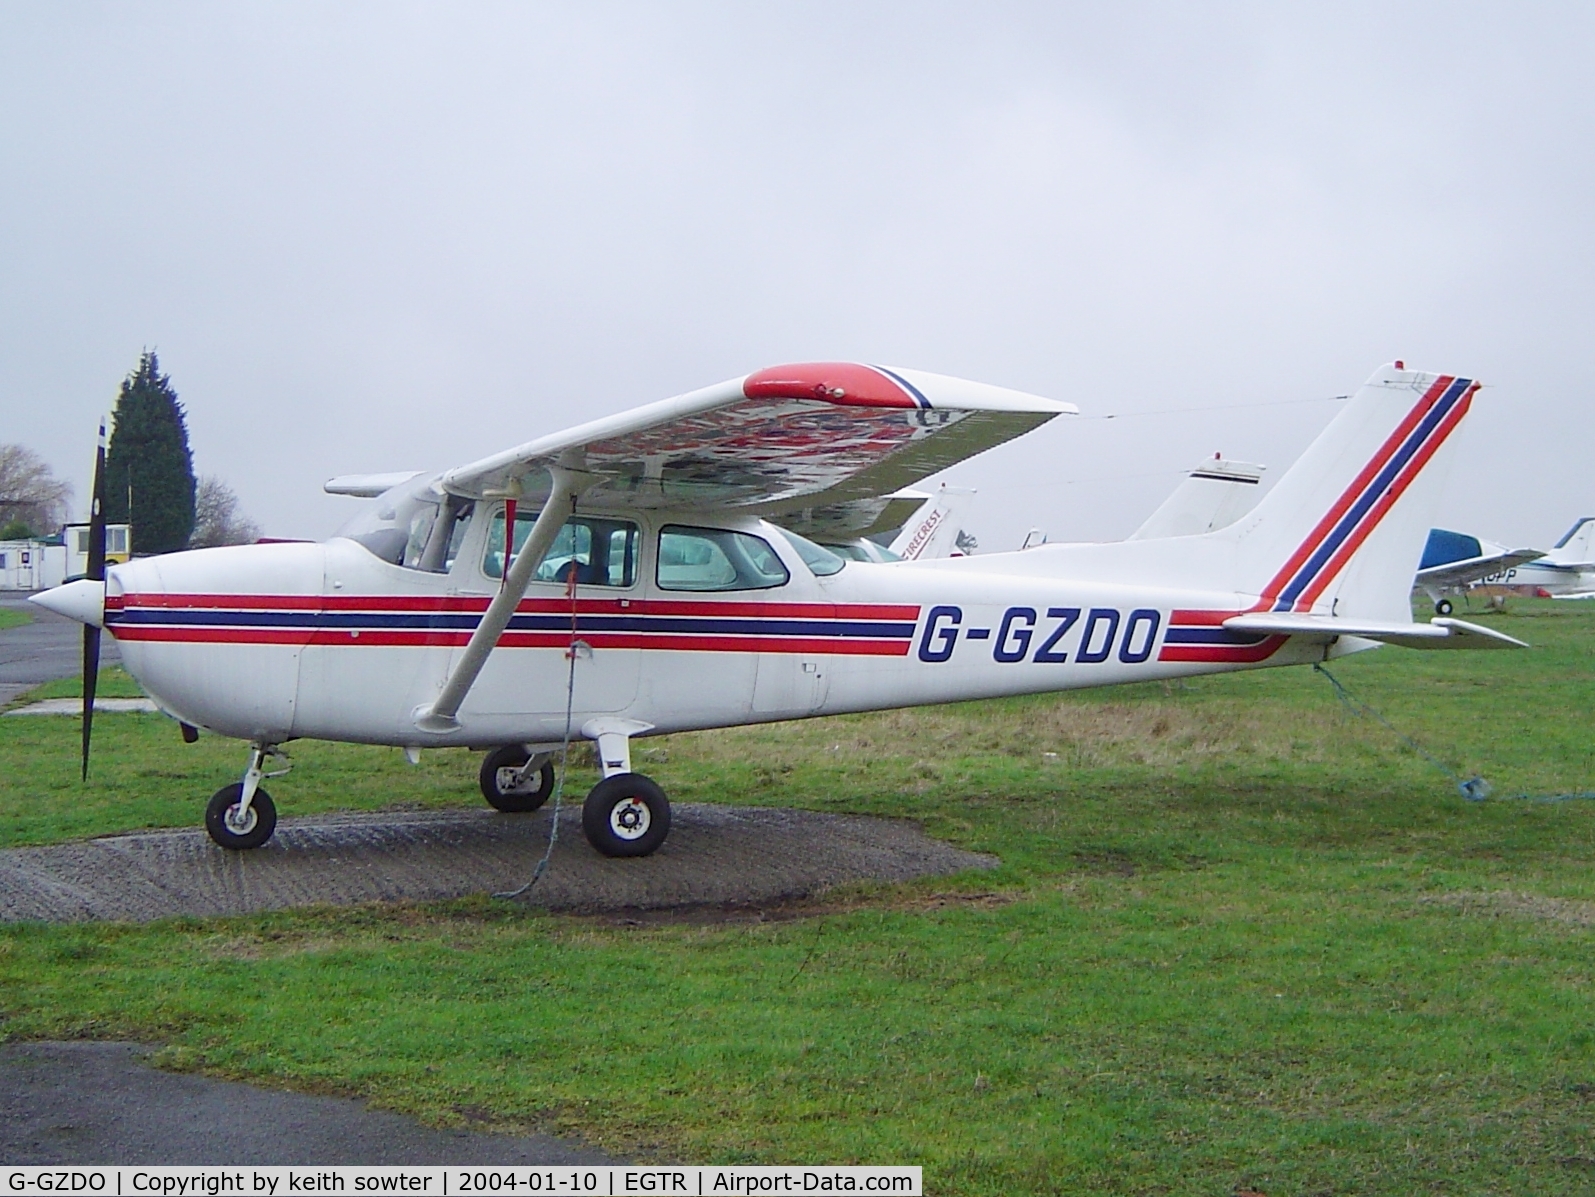 G-GZDO, 1978 Cessna 172N C/N 172-71826, Based aircraft at the time